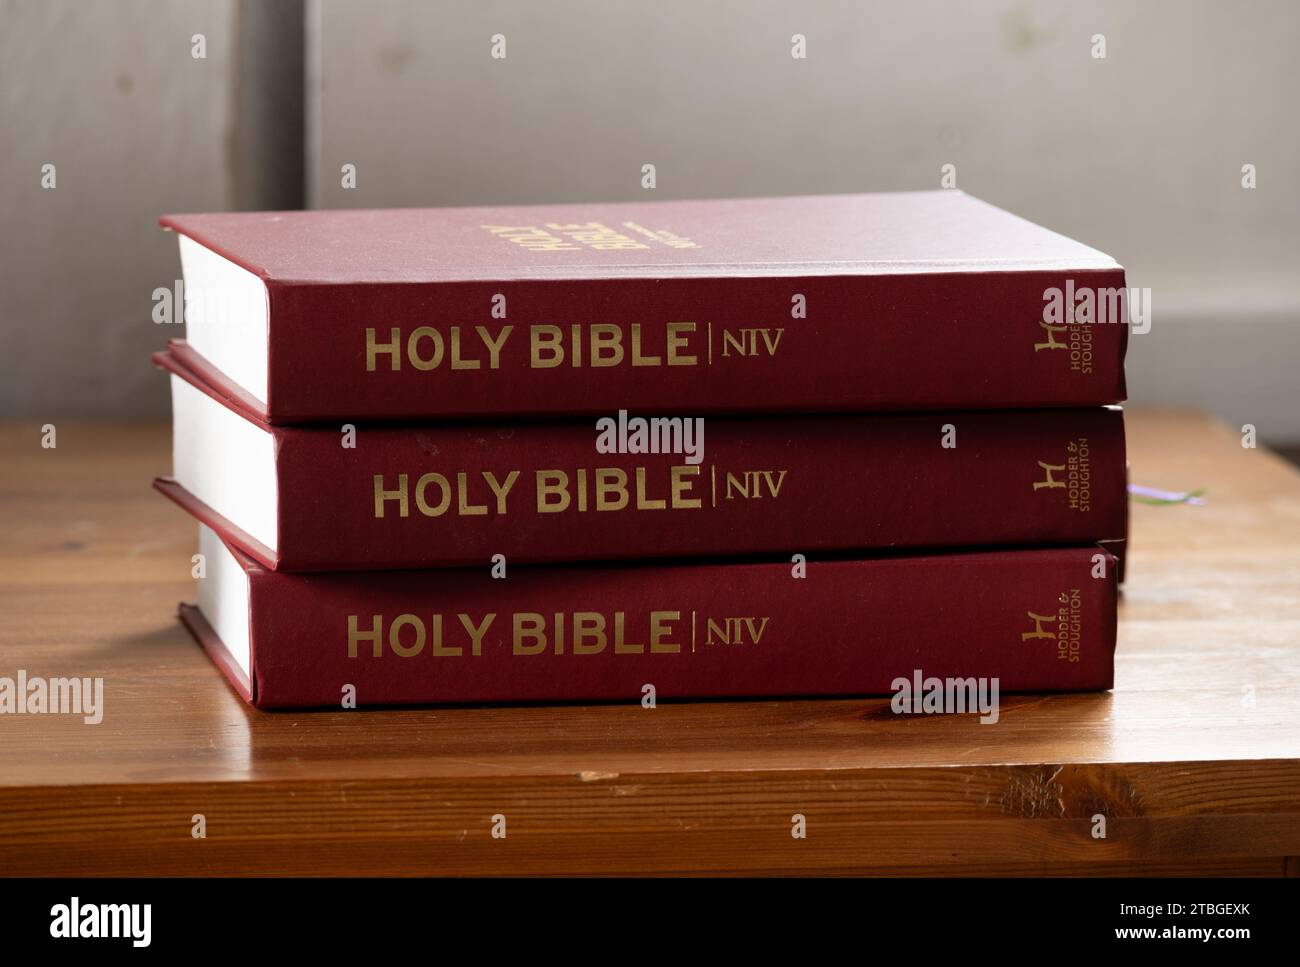 NIV (New International Version) bibles. Stock Photo